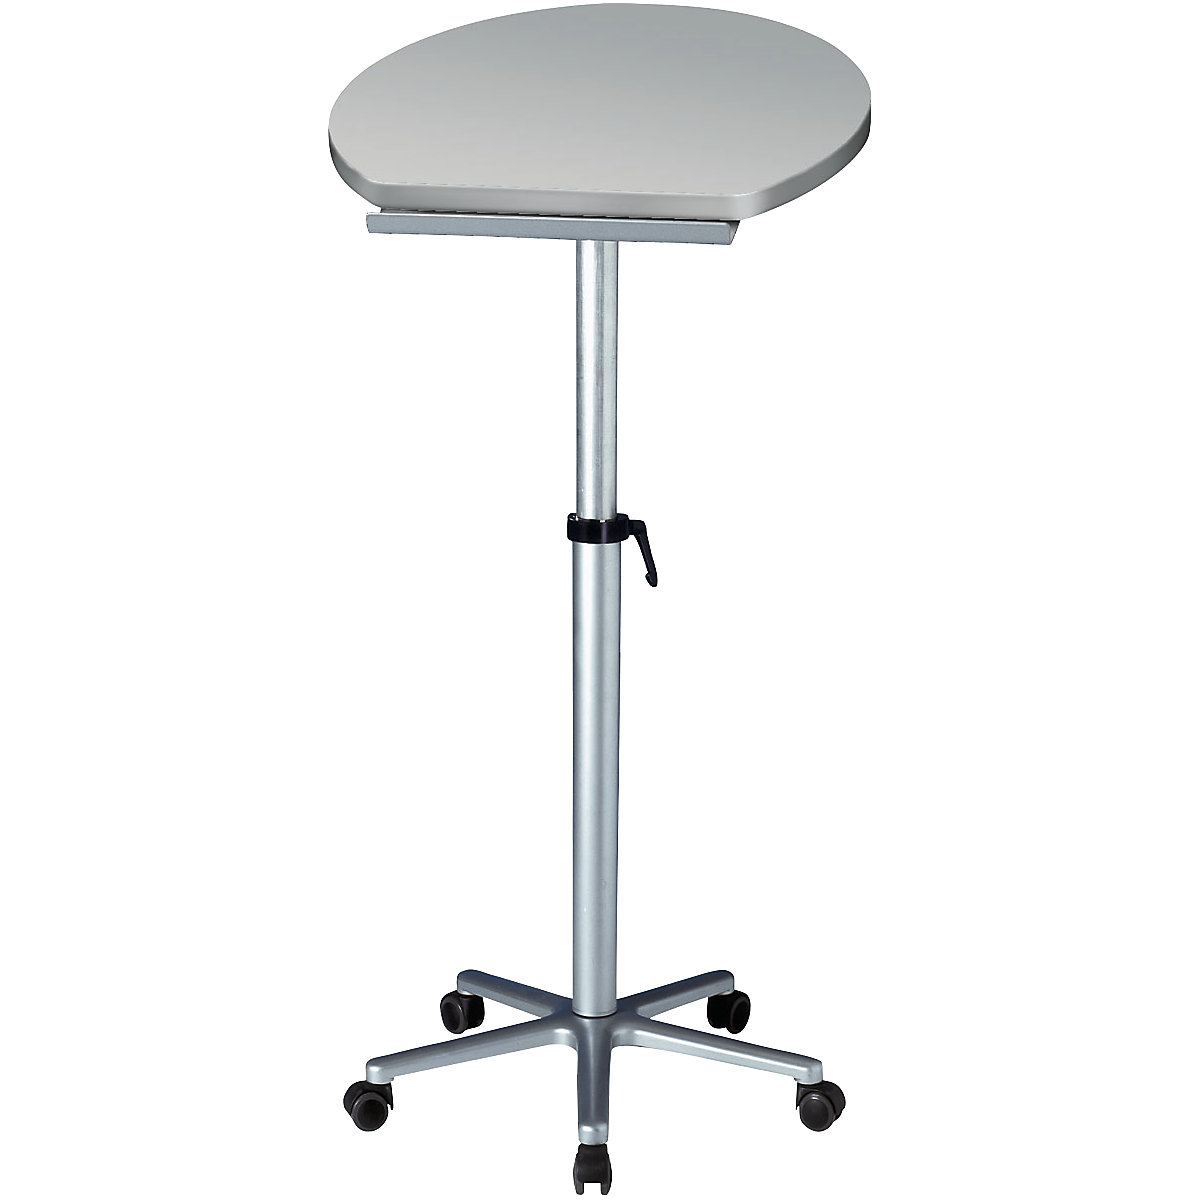 Pedestal desk, ergonomic – MAUL, WxD 600 x 520 mm, height adjustable, grey-6